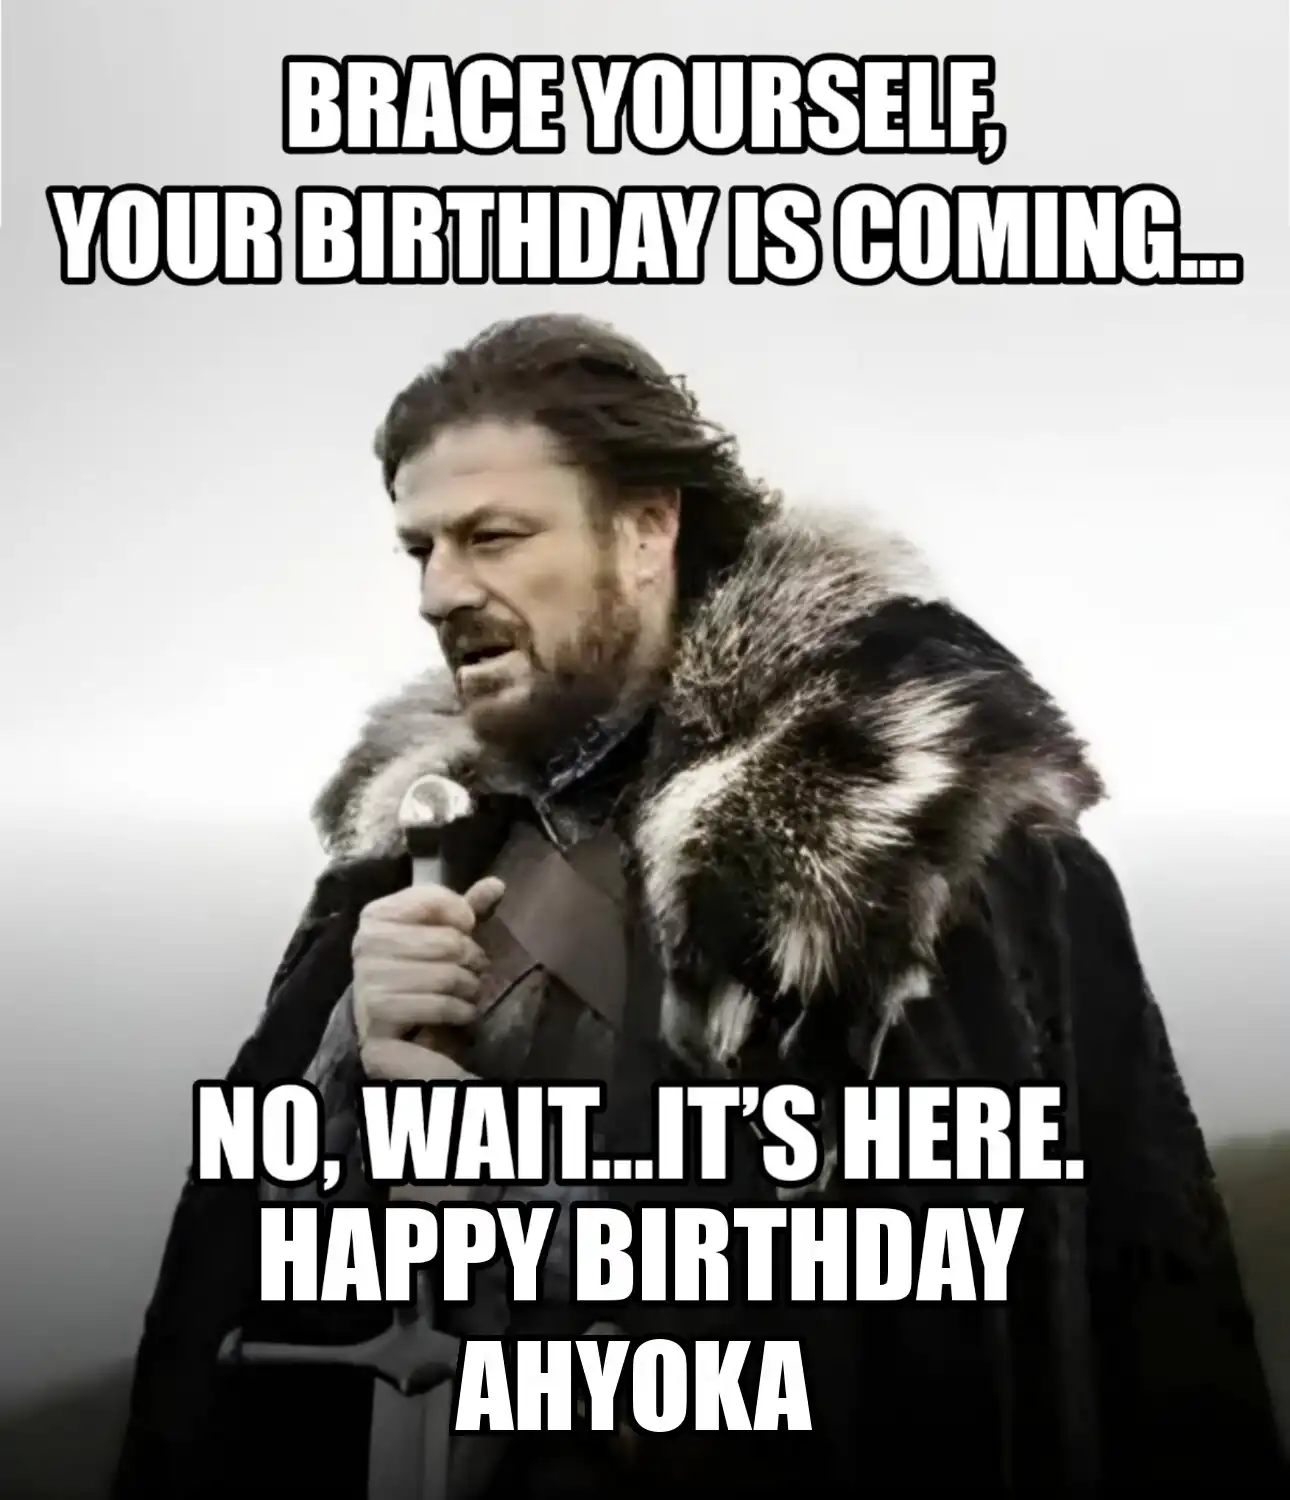 Happy Birthday Ahyoka Brace Yourself Your Birthday Is Coming Meme